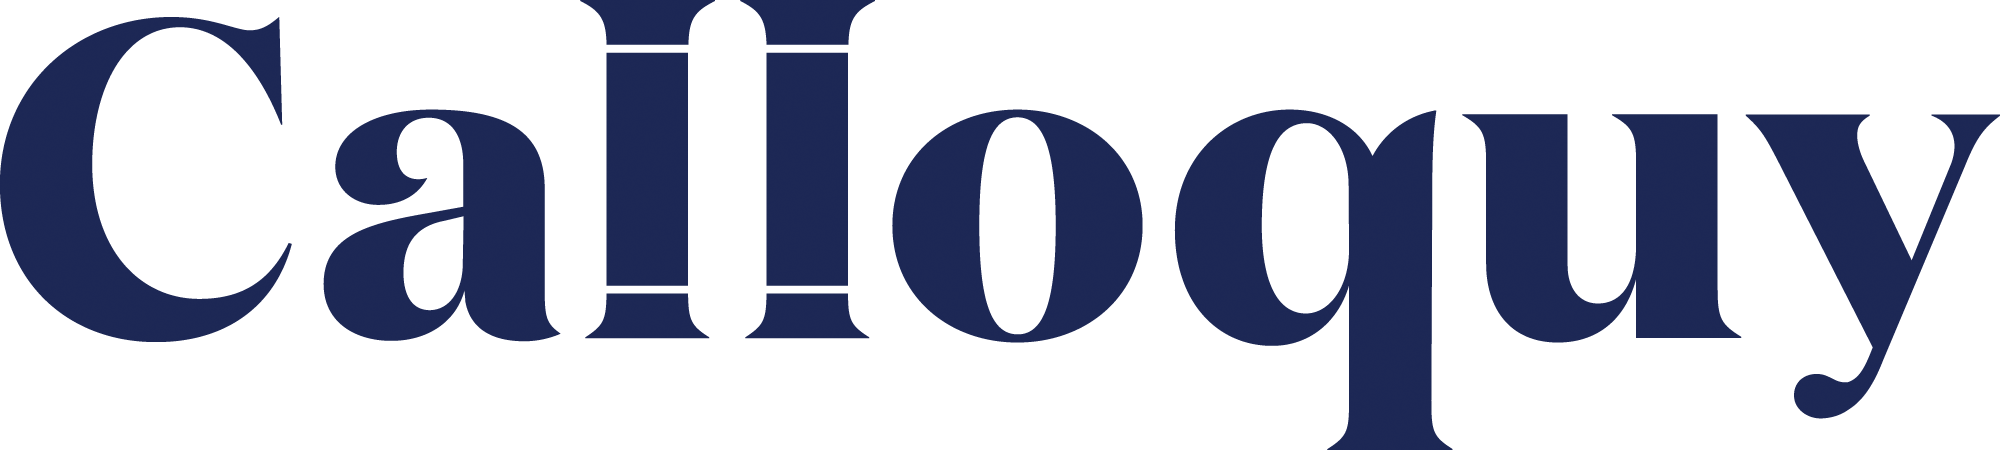 calloquy-logo